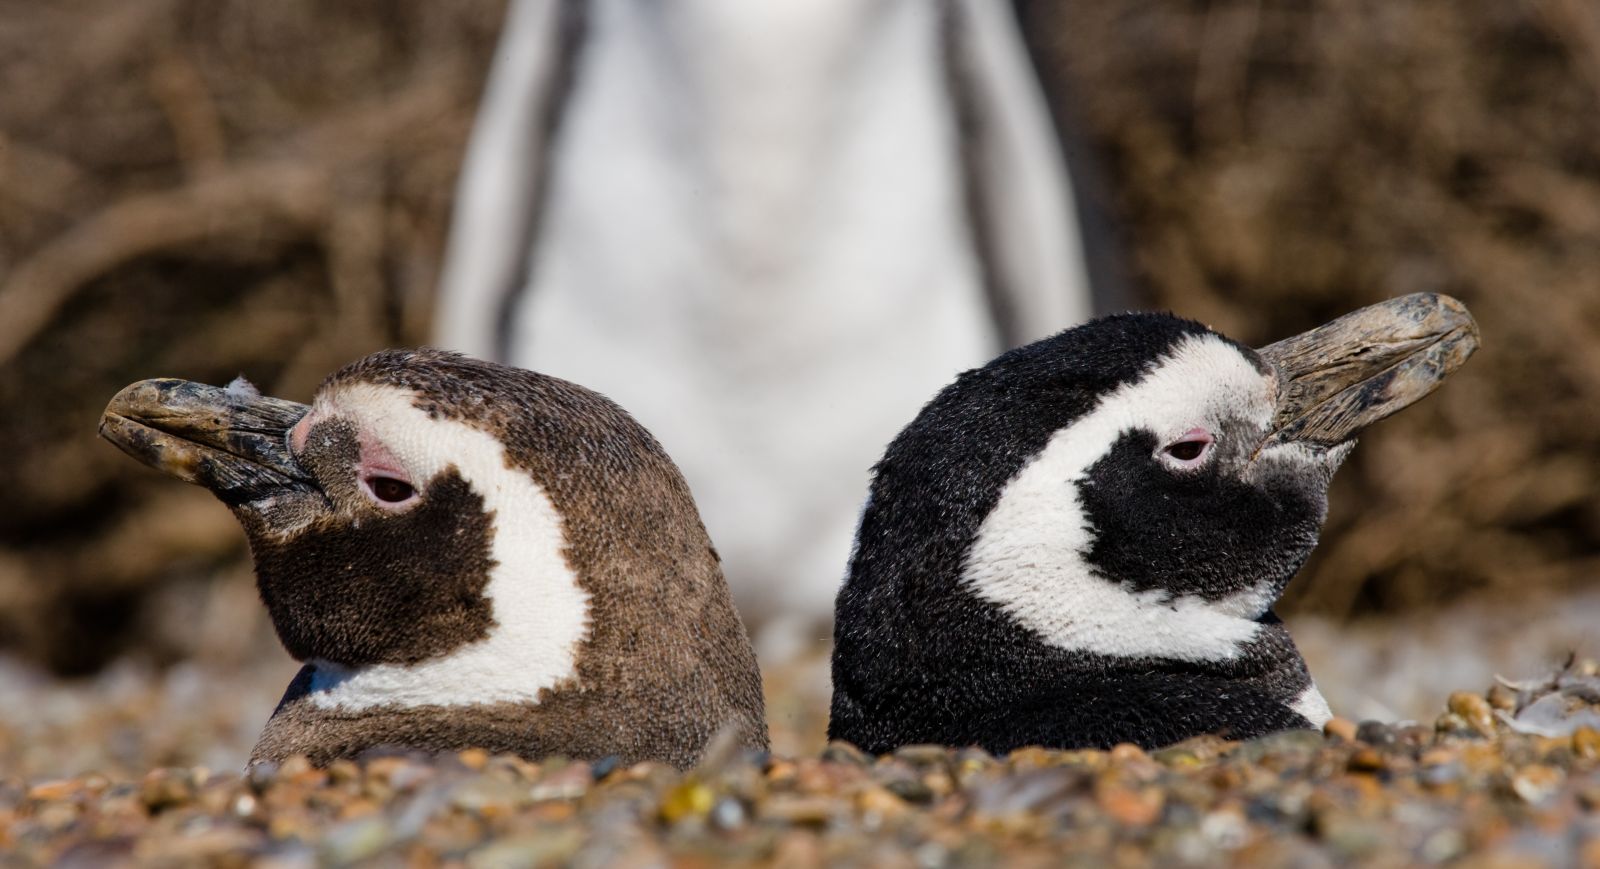 Penguins on the Valdez Peninsular in Argentina